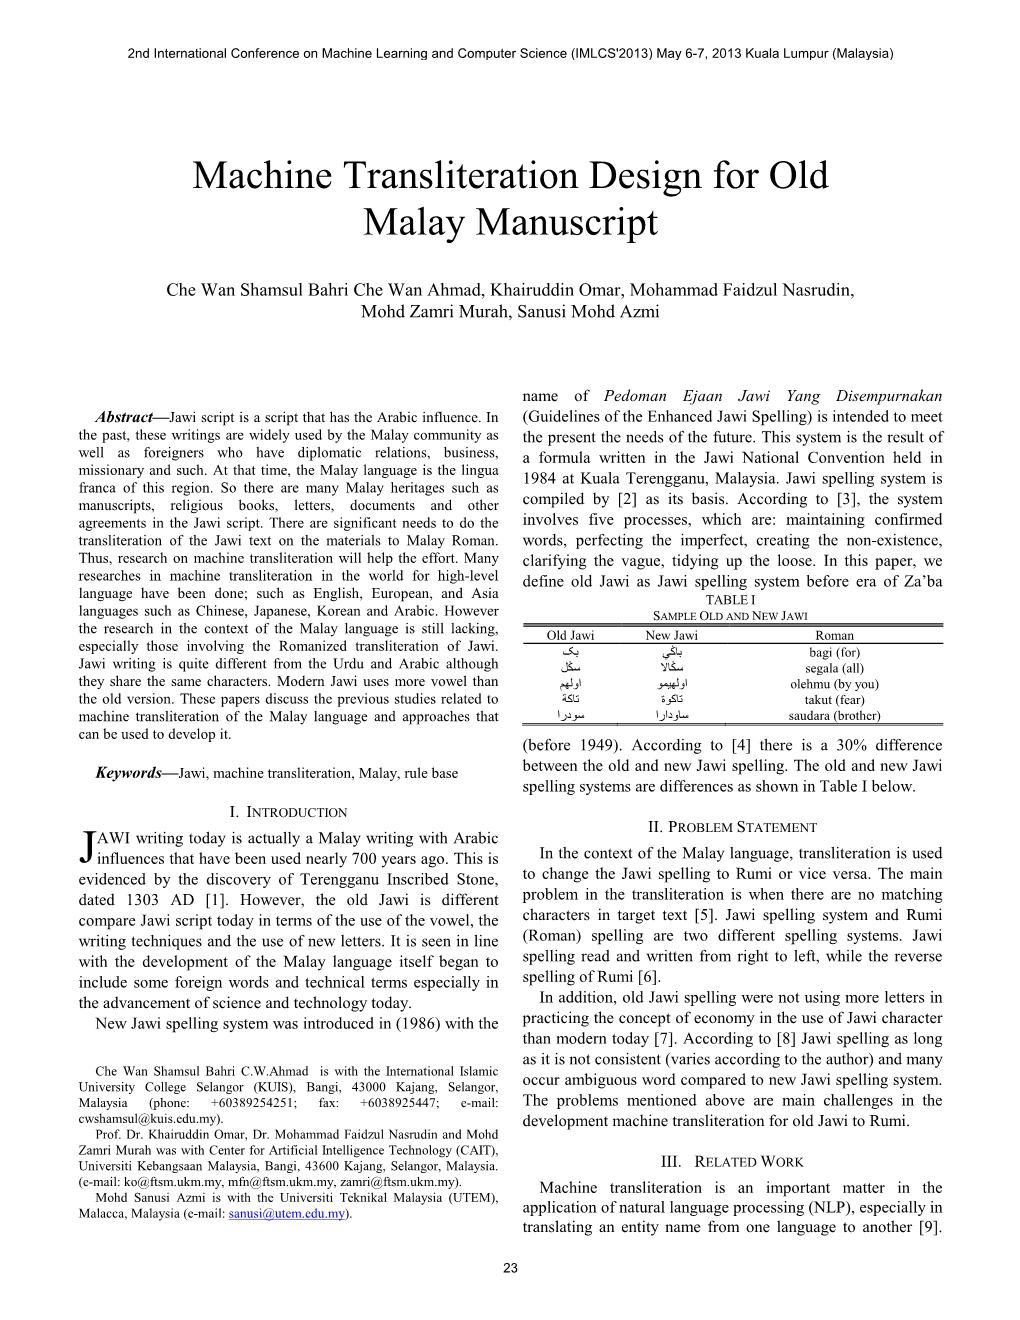 Machine Transliteration Design for Old Malay Manuscript